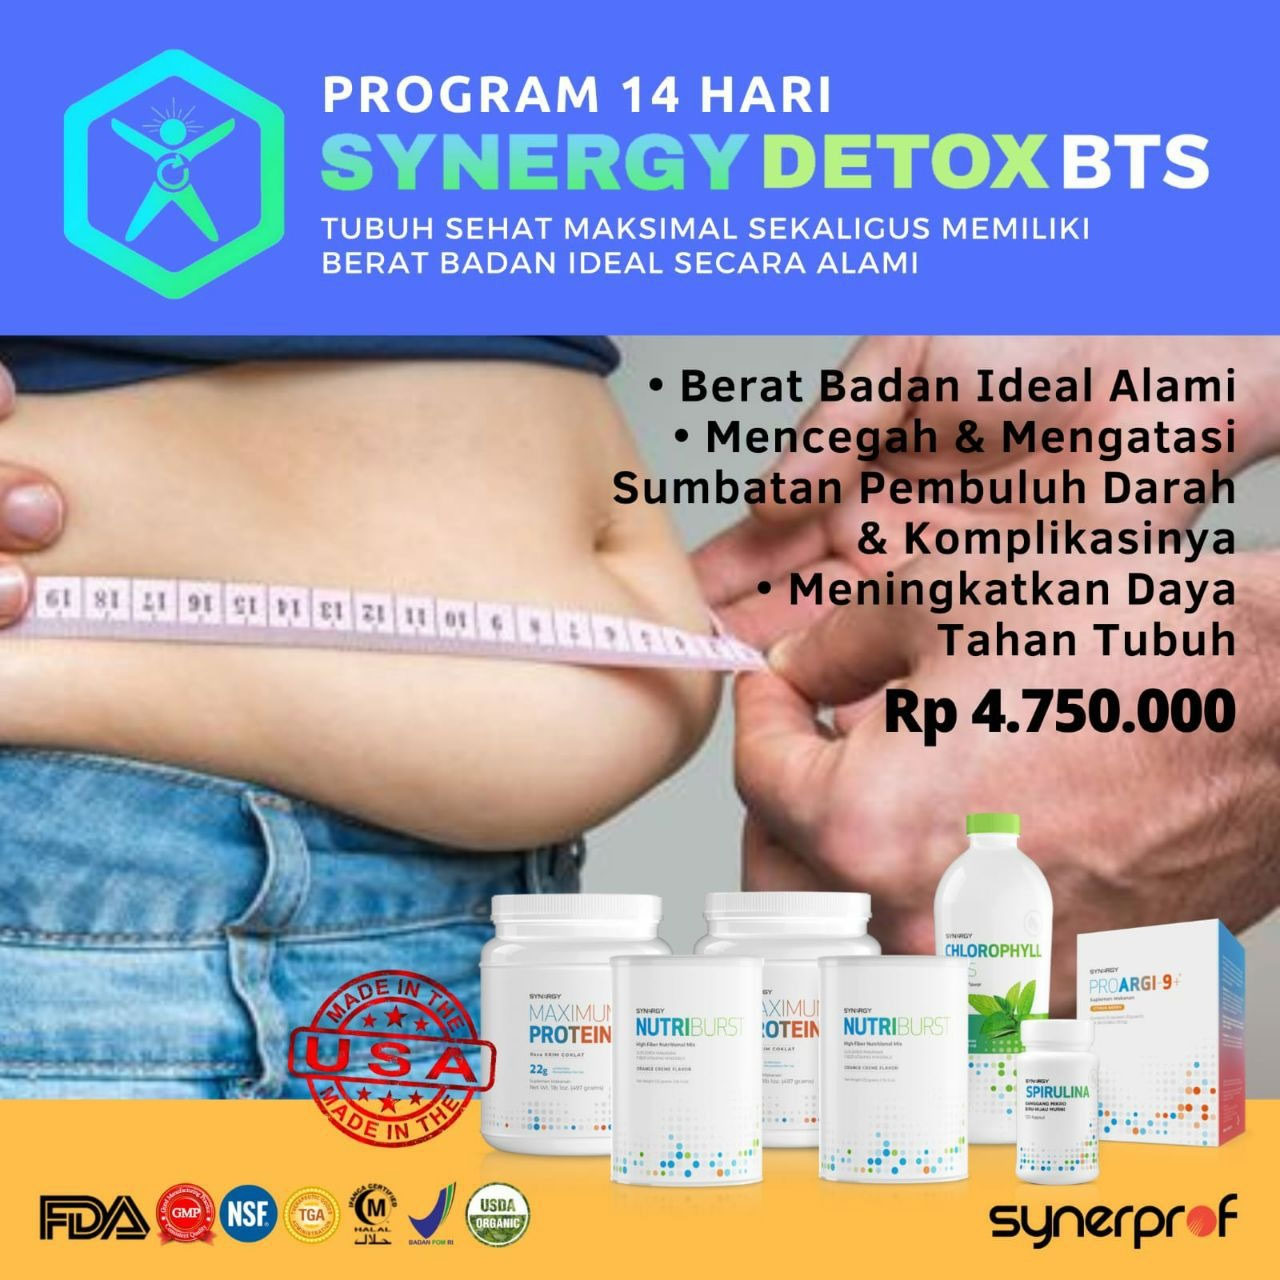 Detox BTS Program 14Hari